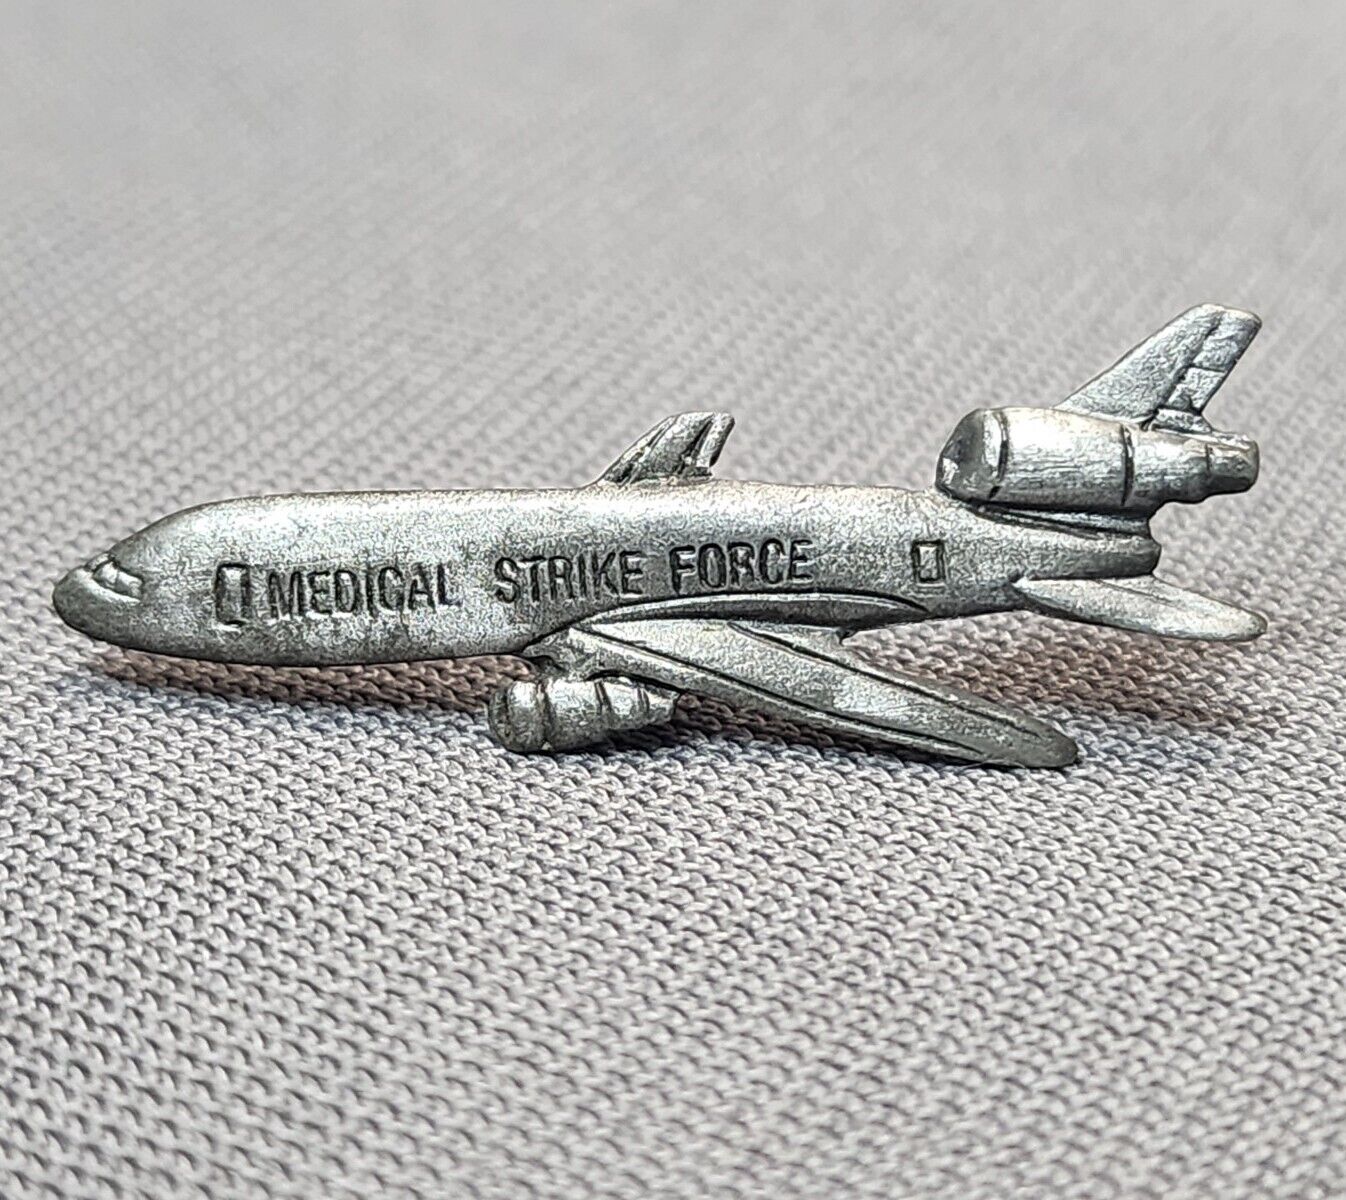 Vintage McDonnell Douglas DC-10 Medical Strike Force Aircraft Pewter Lapel Pin